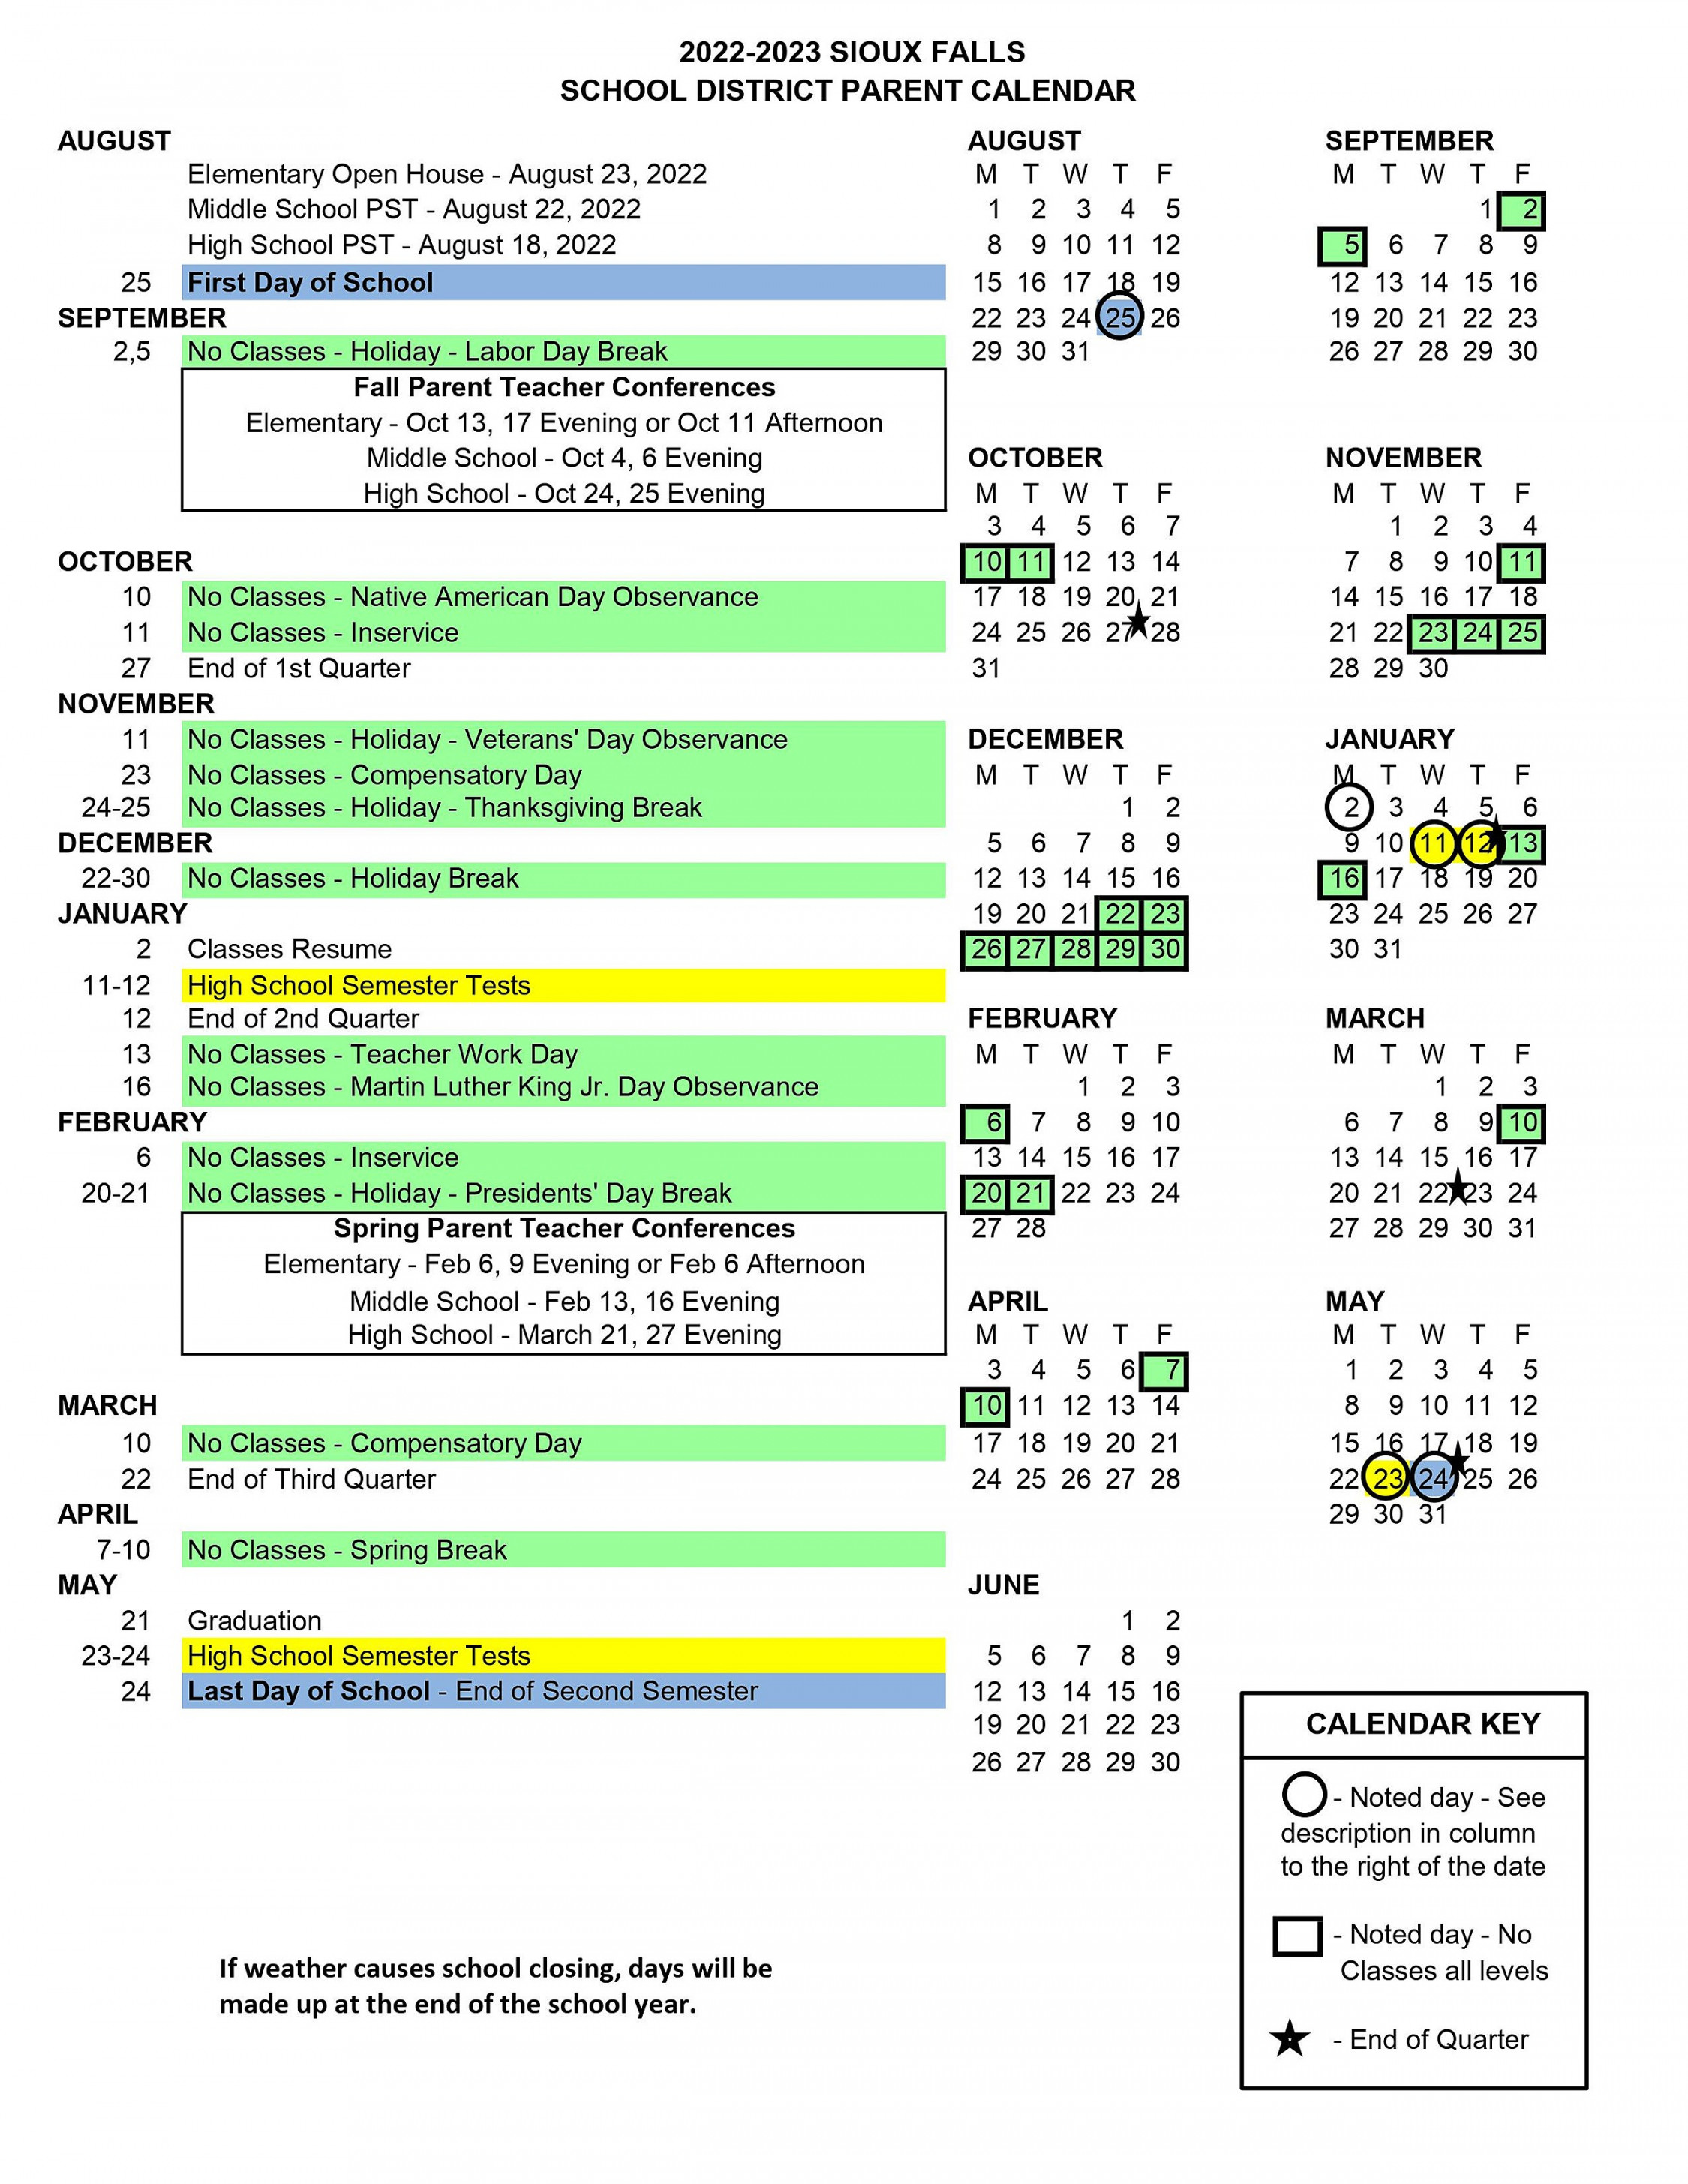 Sioux Falls School District Calendar -